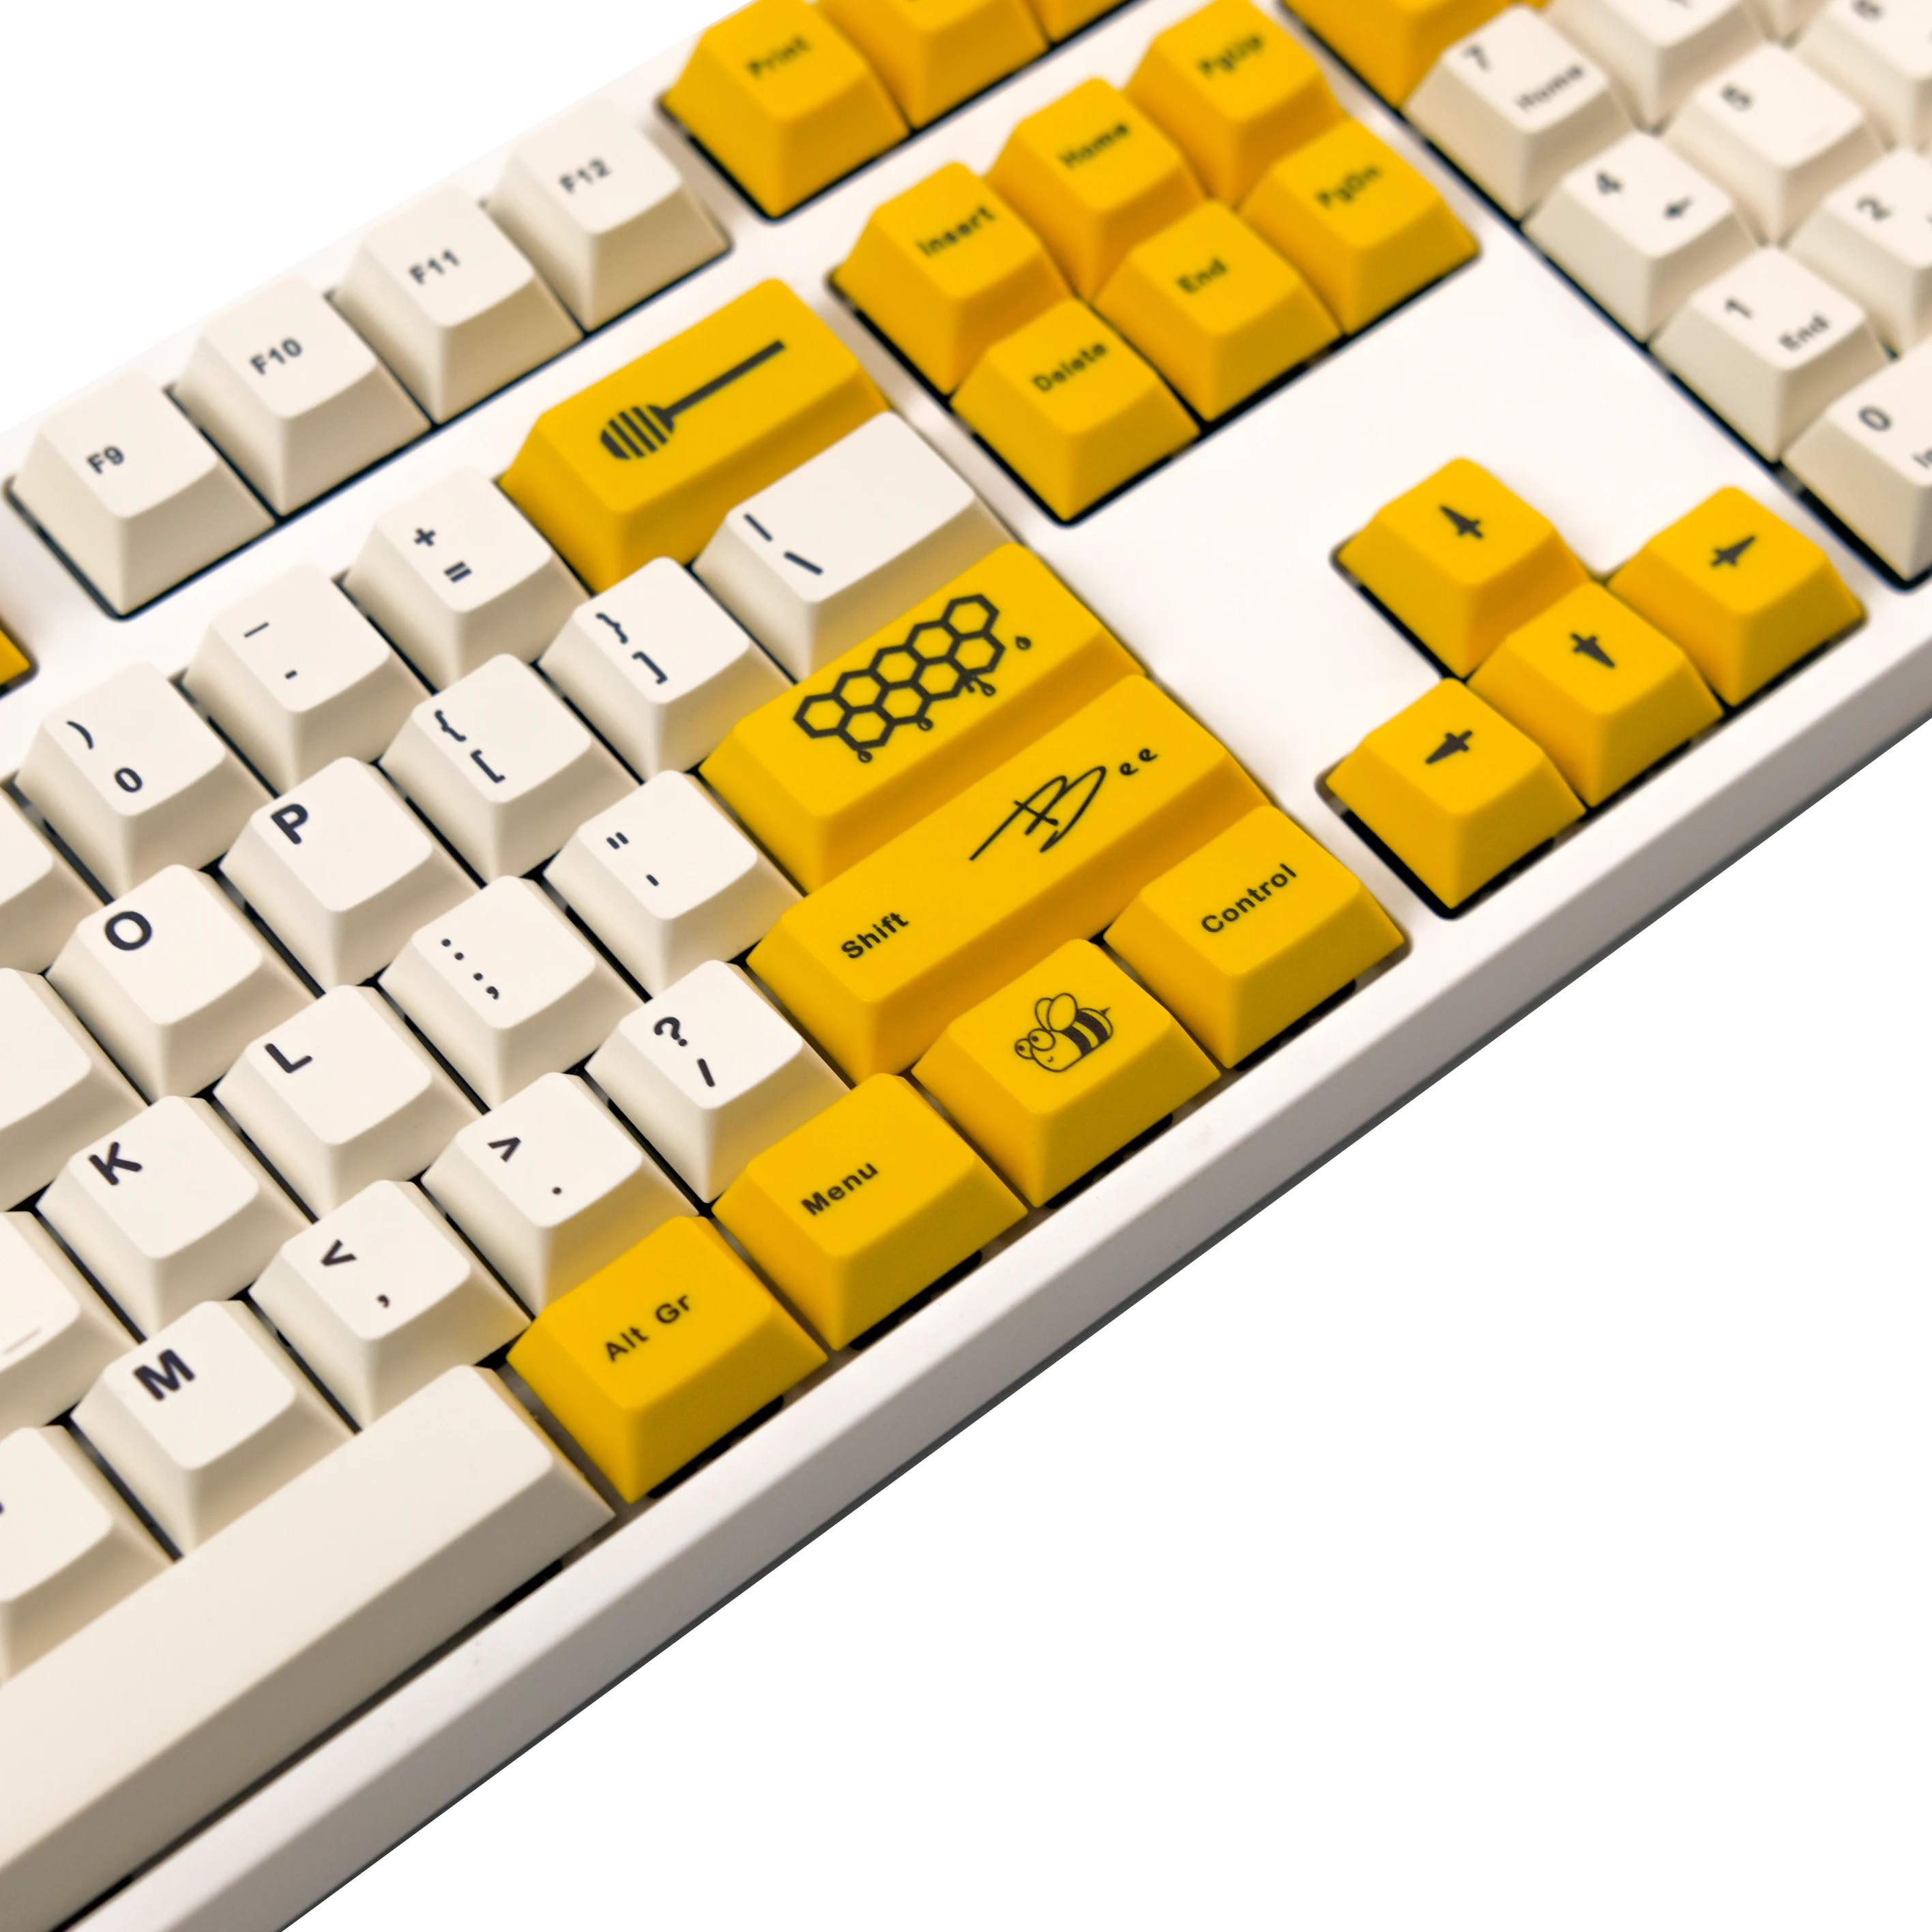 Premium Bumblebee ISO Kit Doubleshot Cherry MX Keycap Keyset 